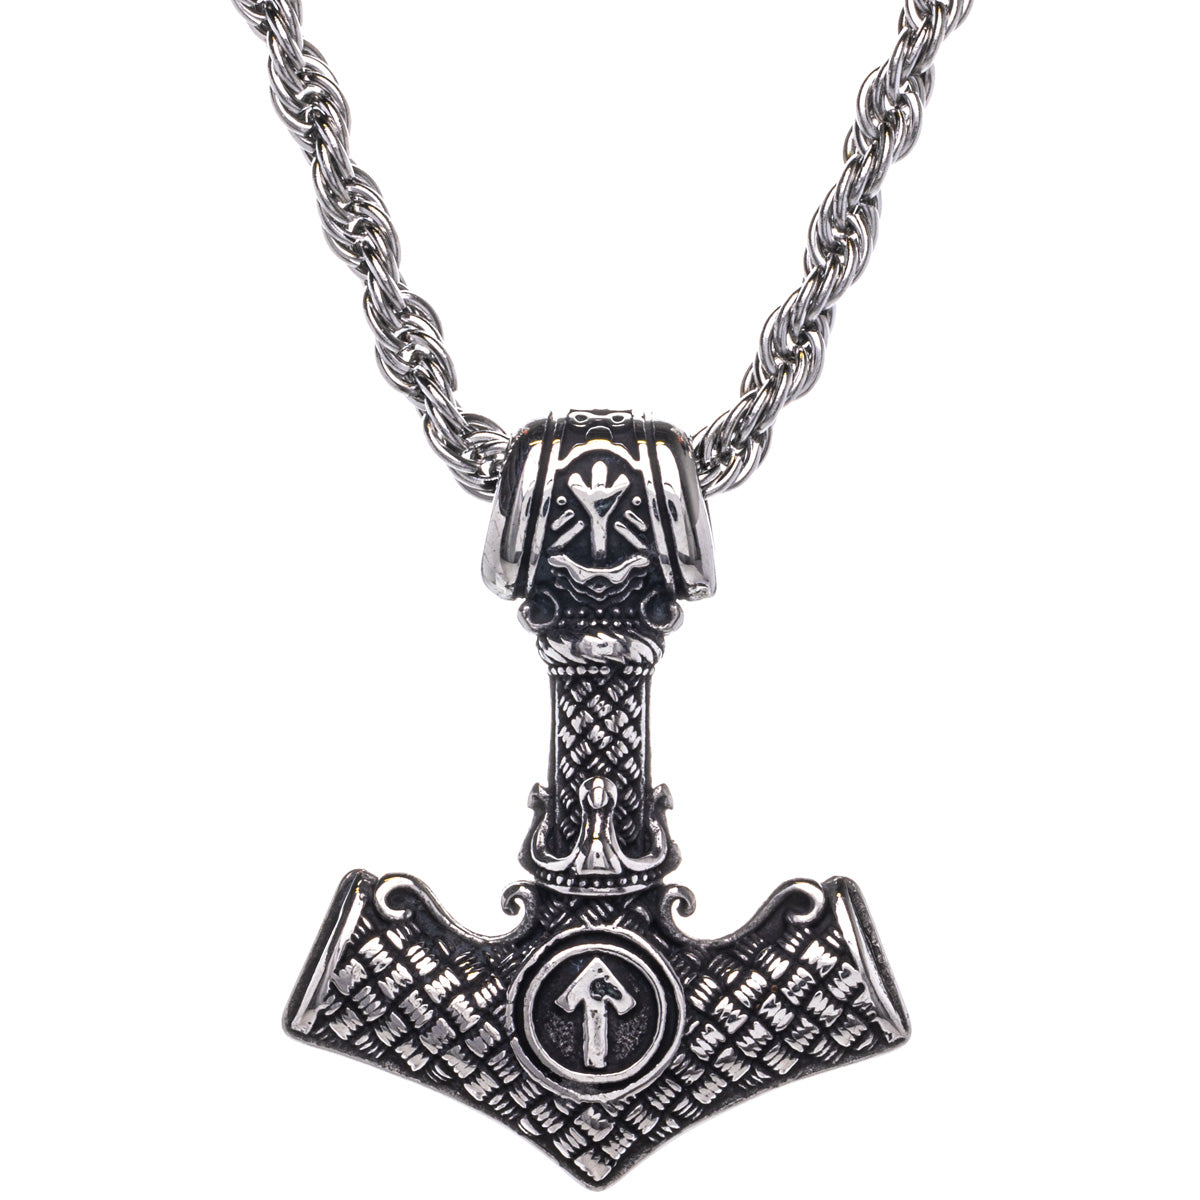 Thorin vasara Mjölnir riipus kaulakoru Valknut-symbolilla (Teräs 316L)